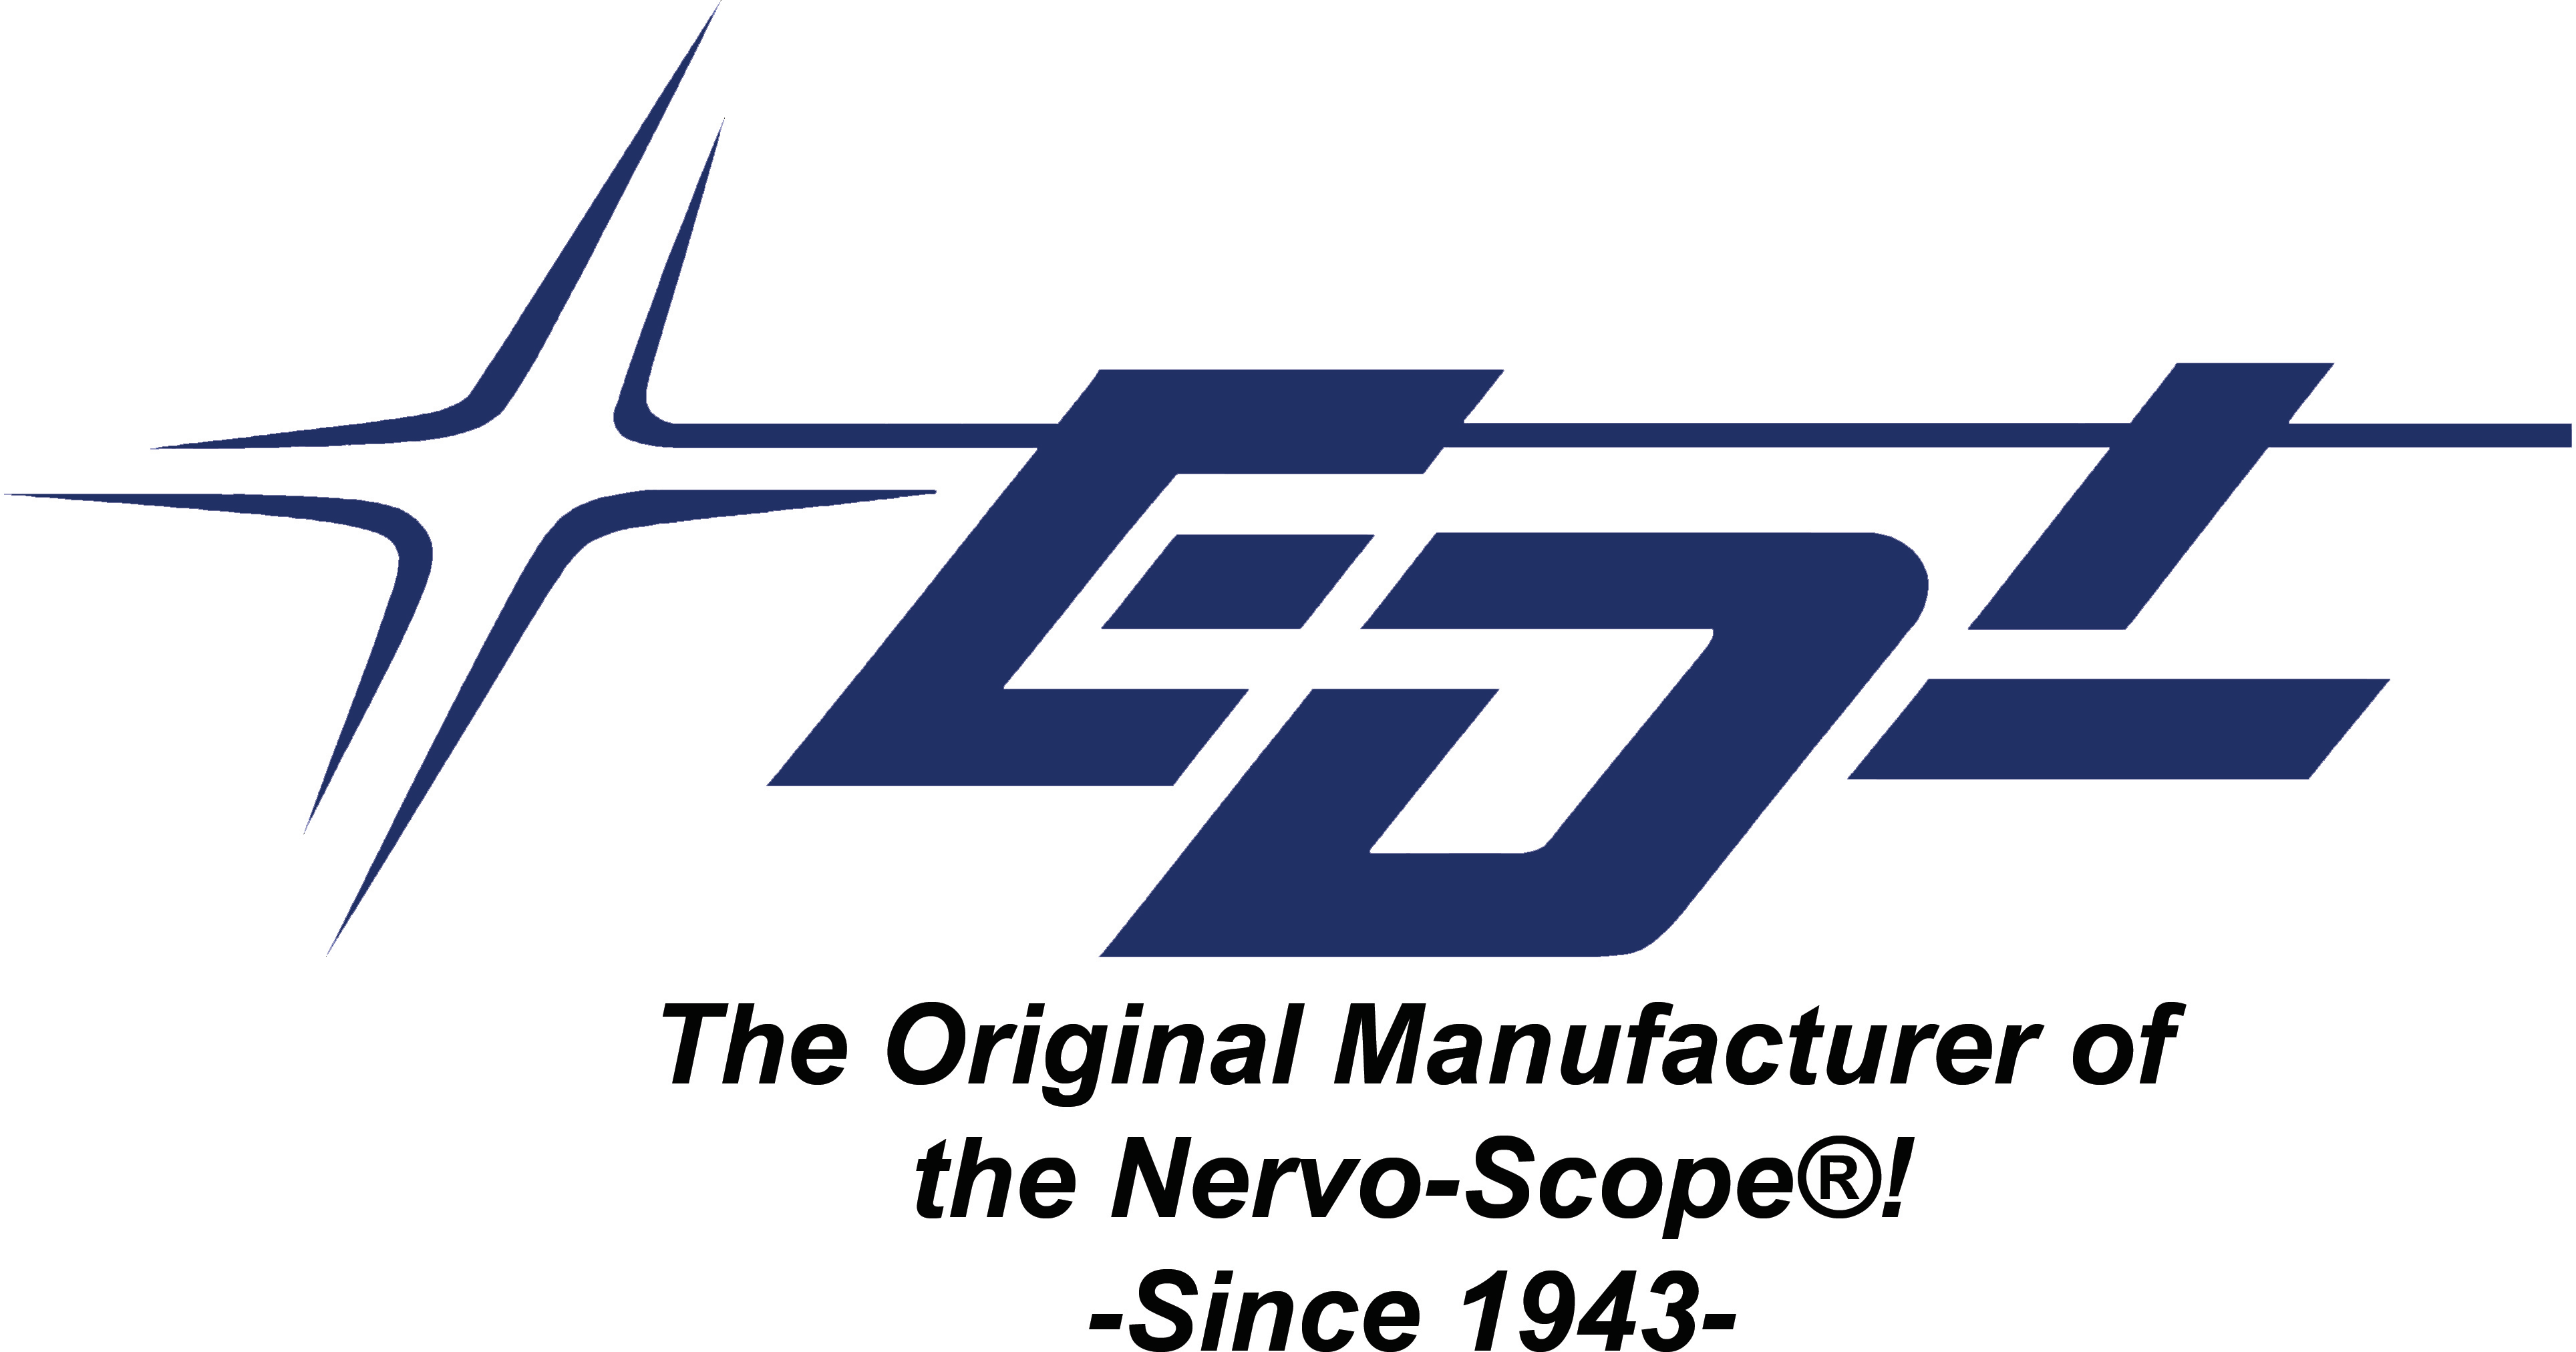 Electronic Development Laboratories, Inc